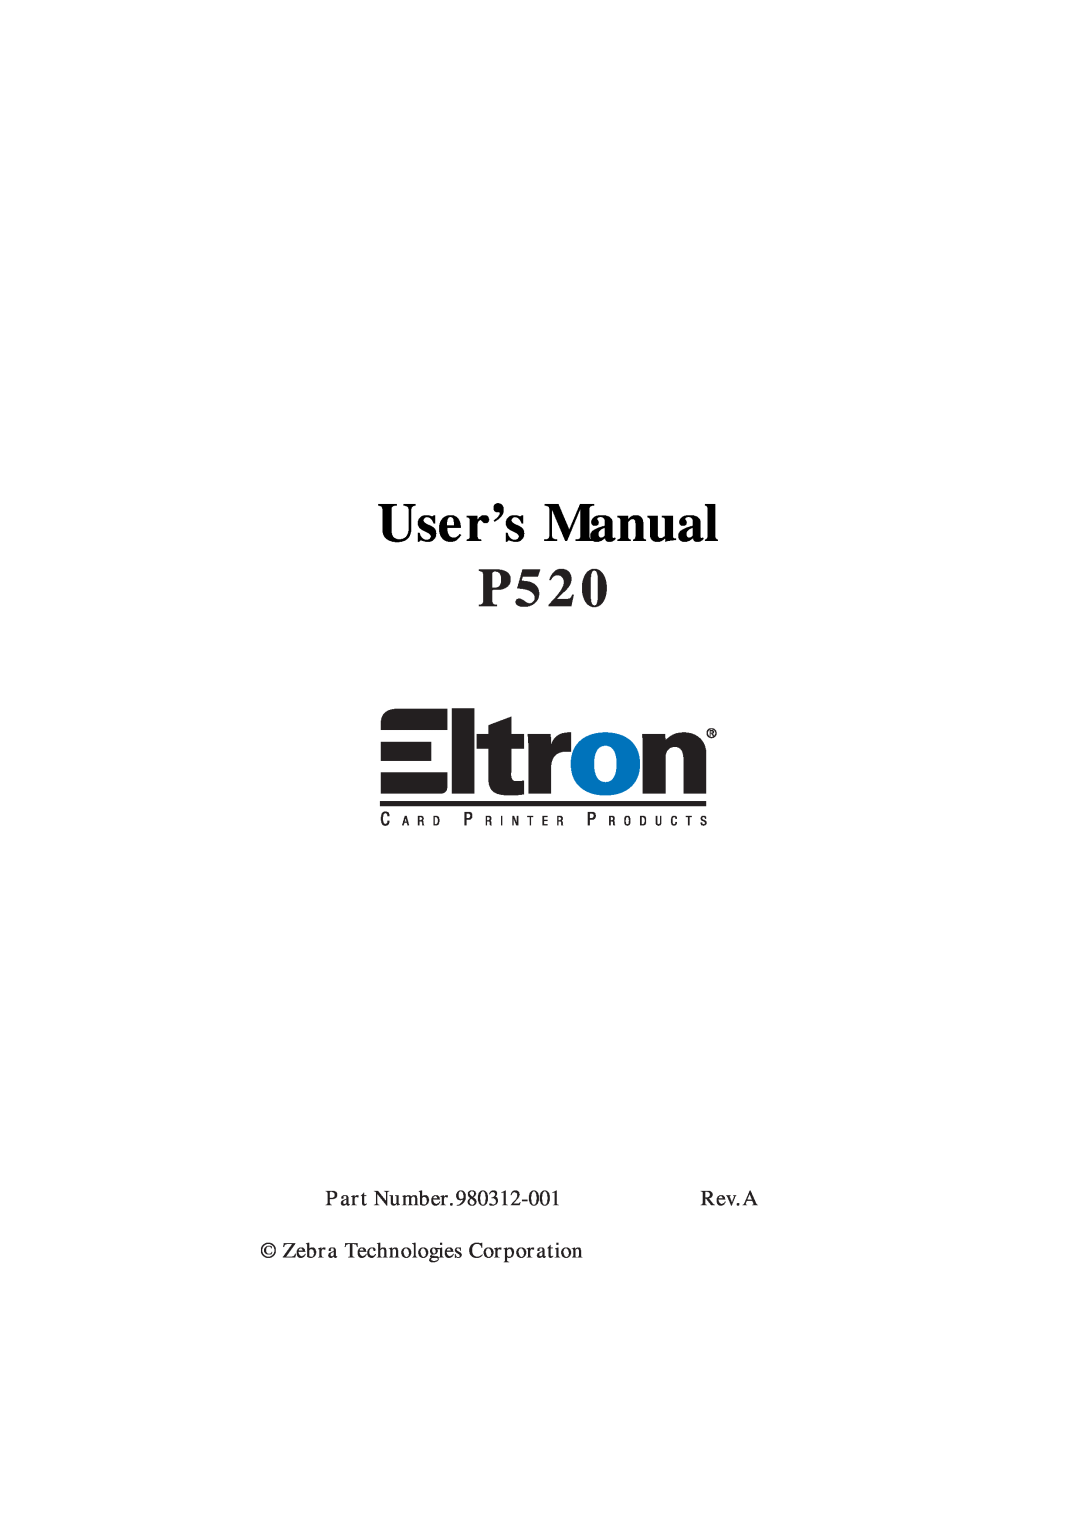 Zebra Technologies user manual User’s Manual P520, Part Number.980312-001, Rev.A, Zebra Technologies Corporation 